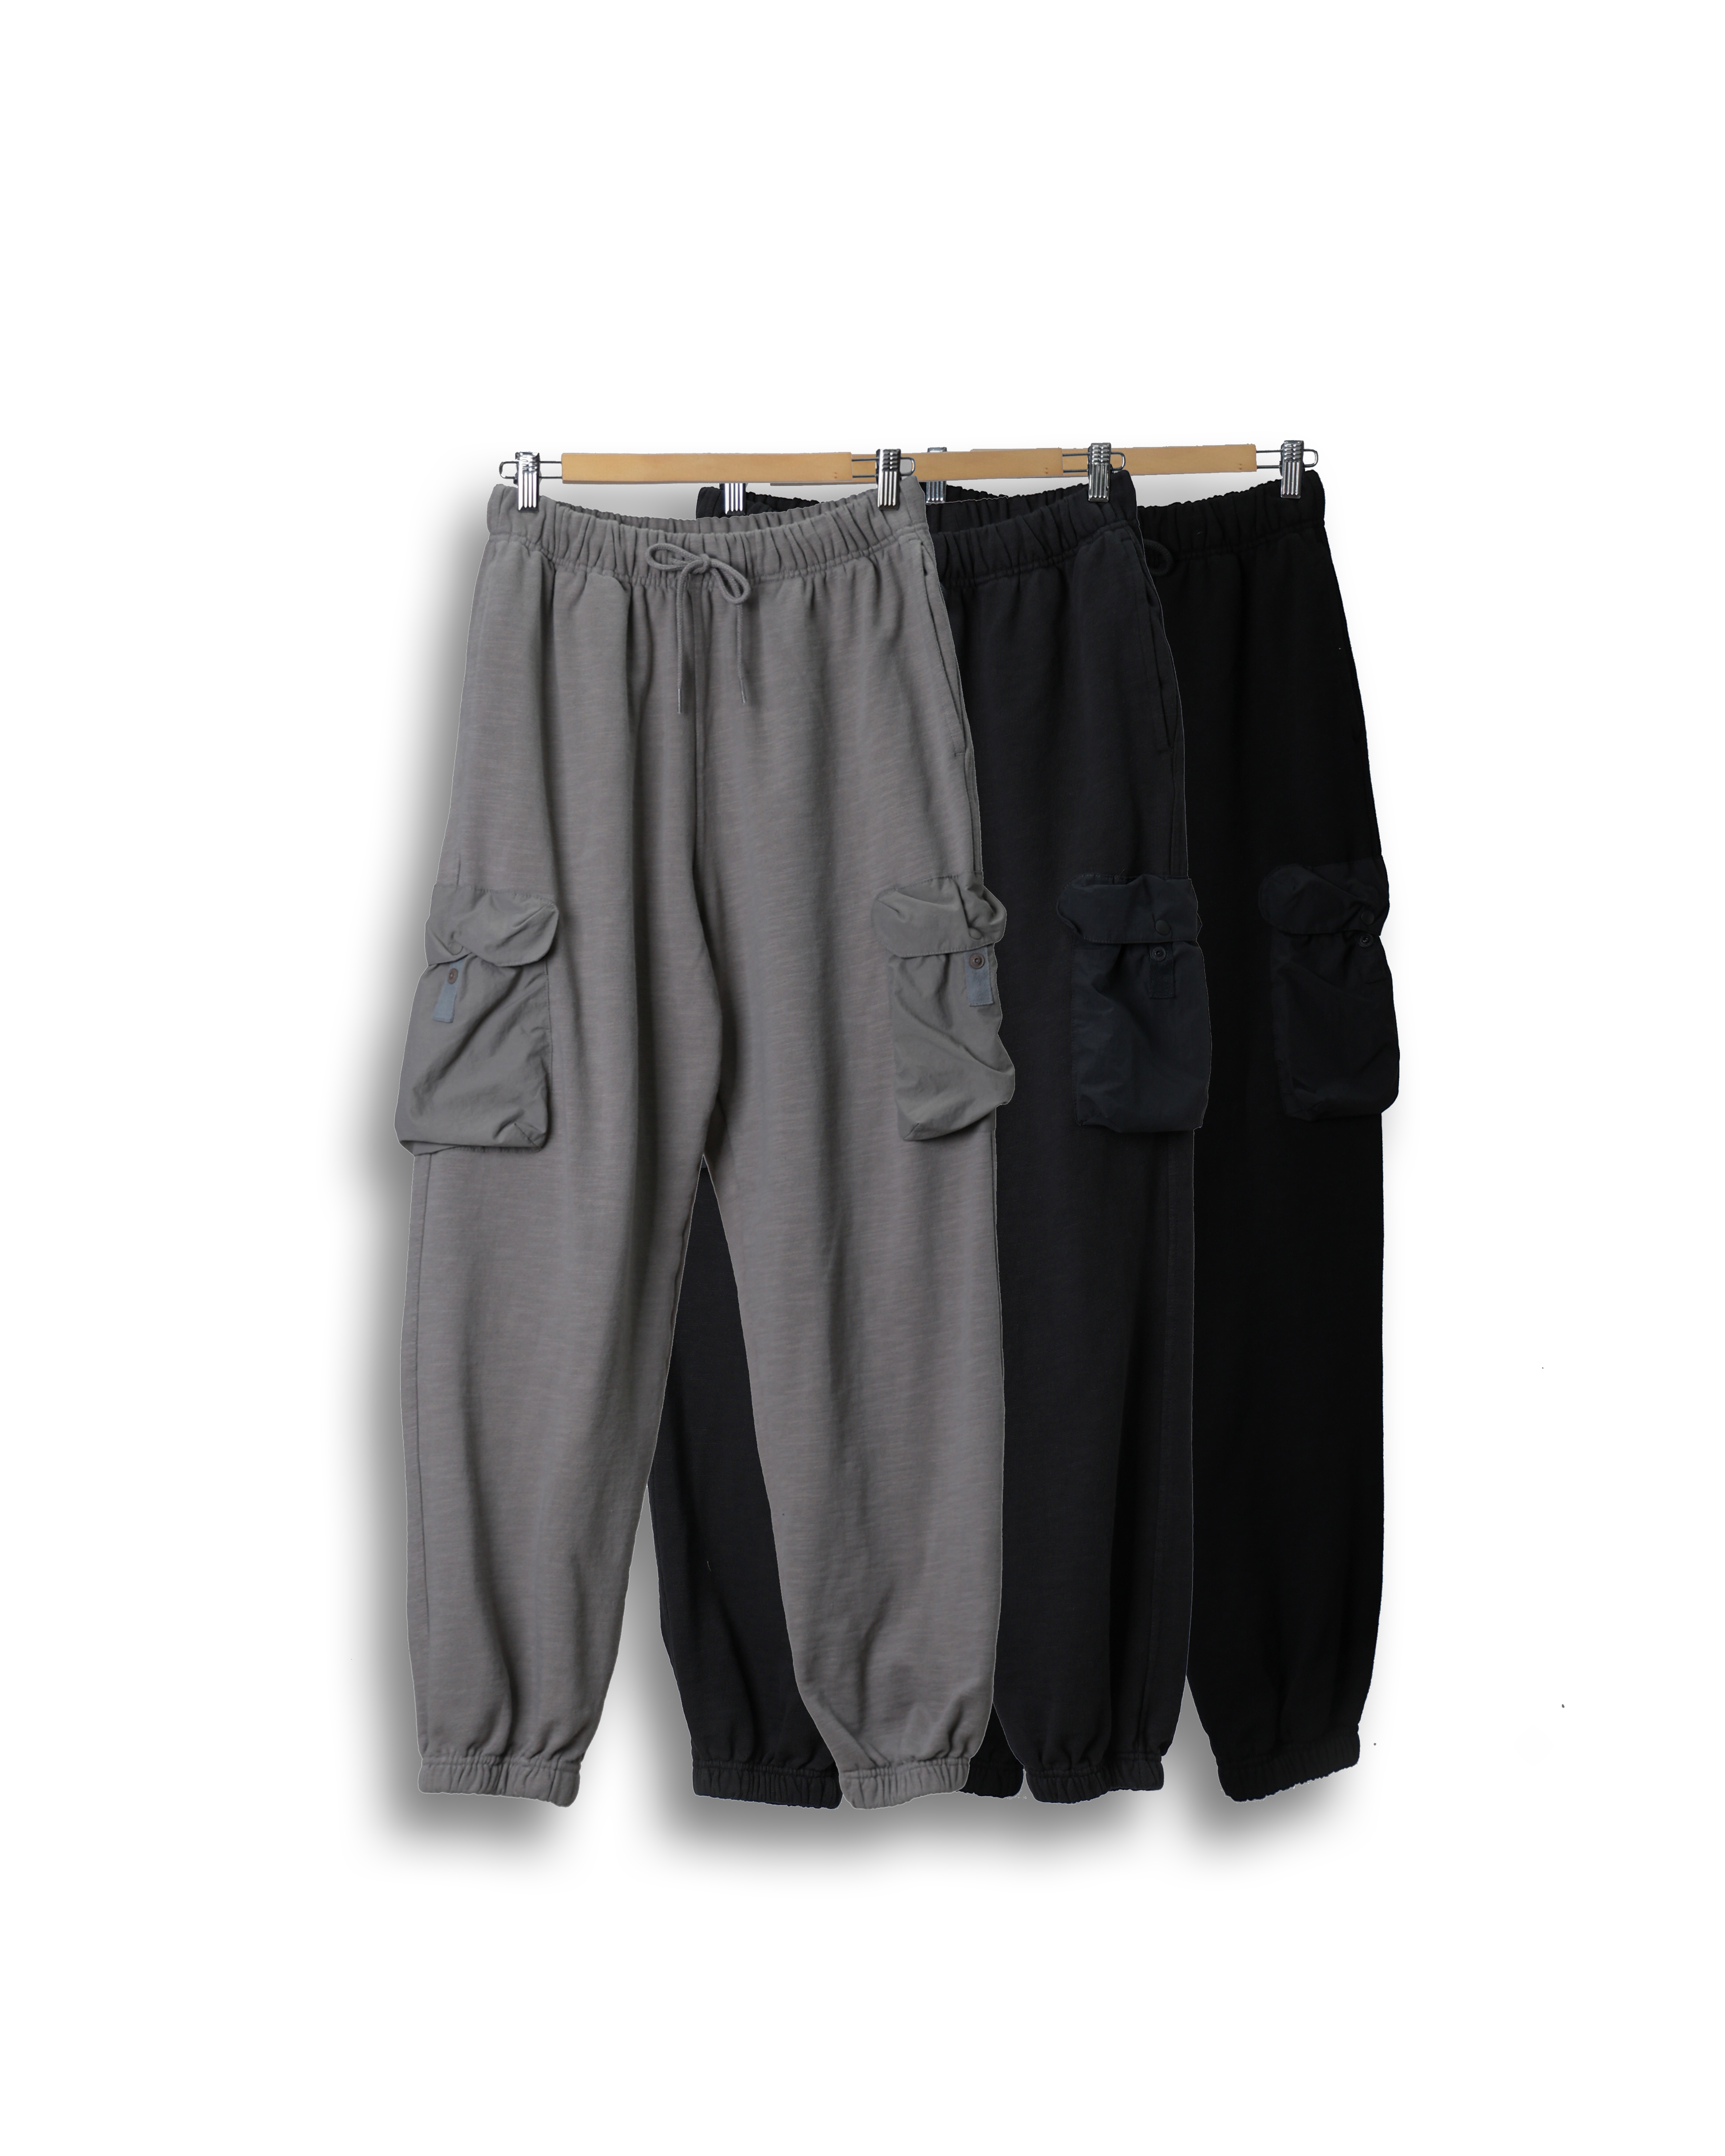 PECTR Mil Pocket Sweat Jogger Pants (Black/Charcoal/Gray)